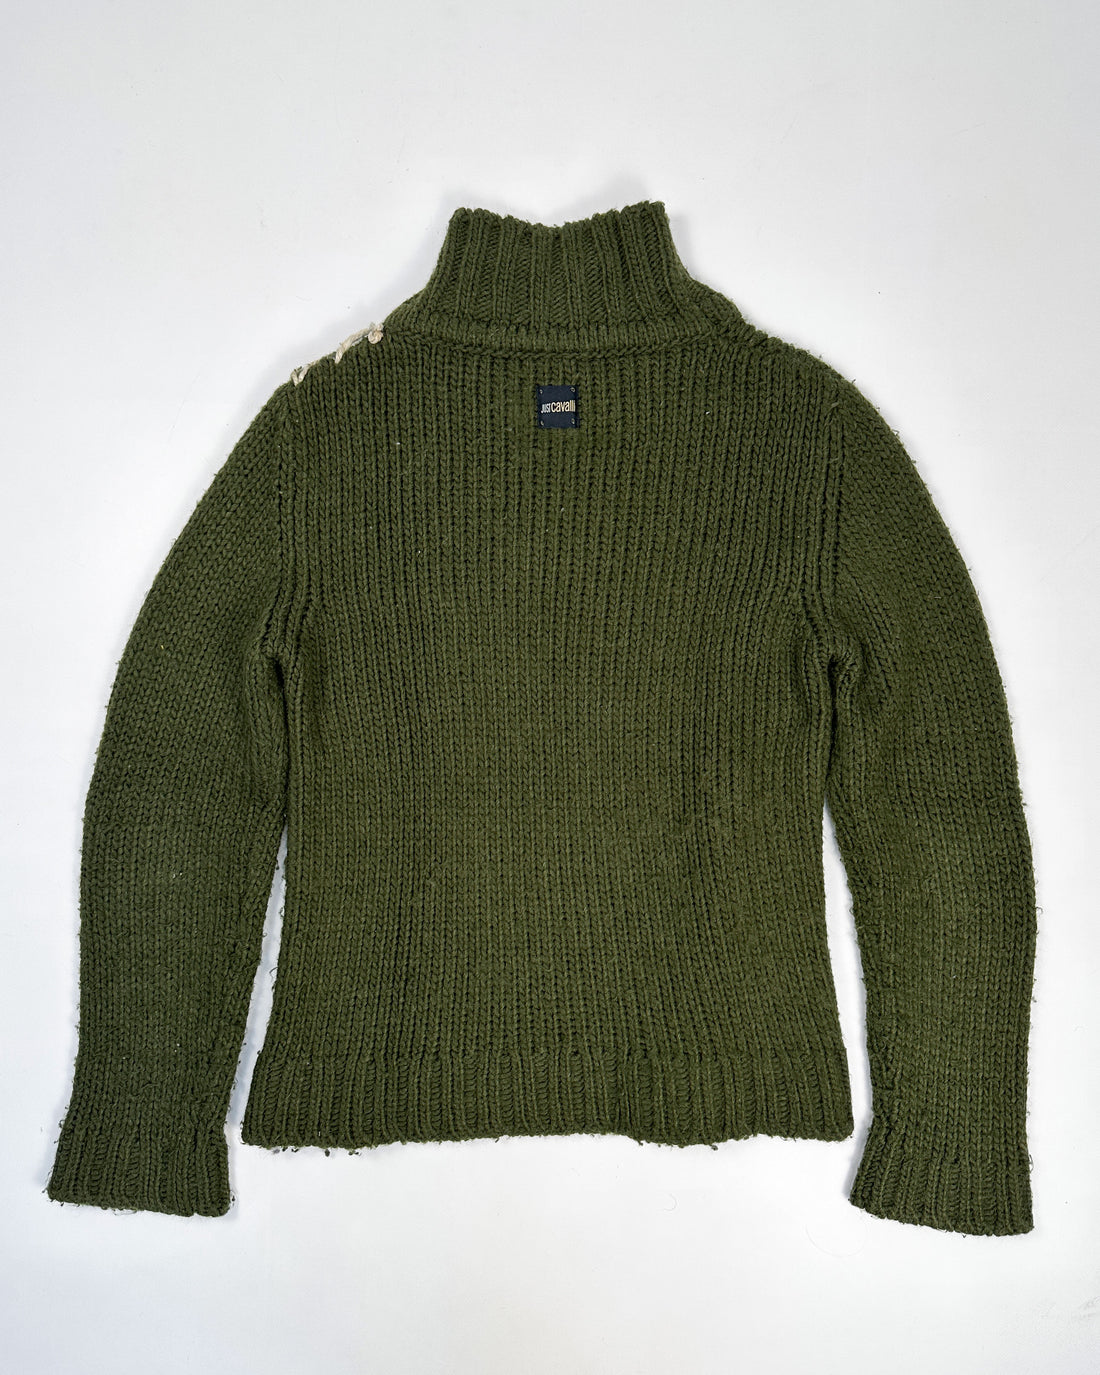 Roberto Cavalli Green Turtle Neck Knit Sweater 1990's